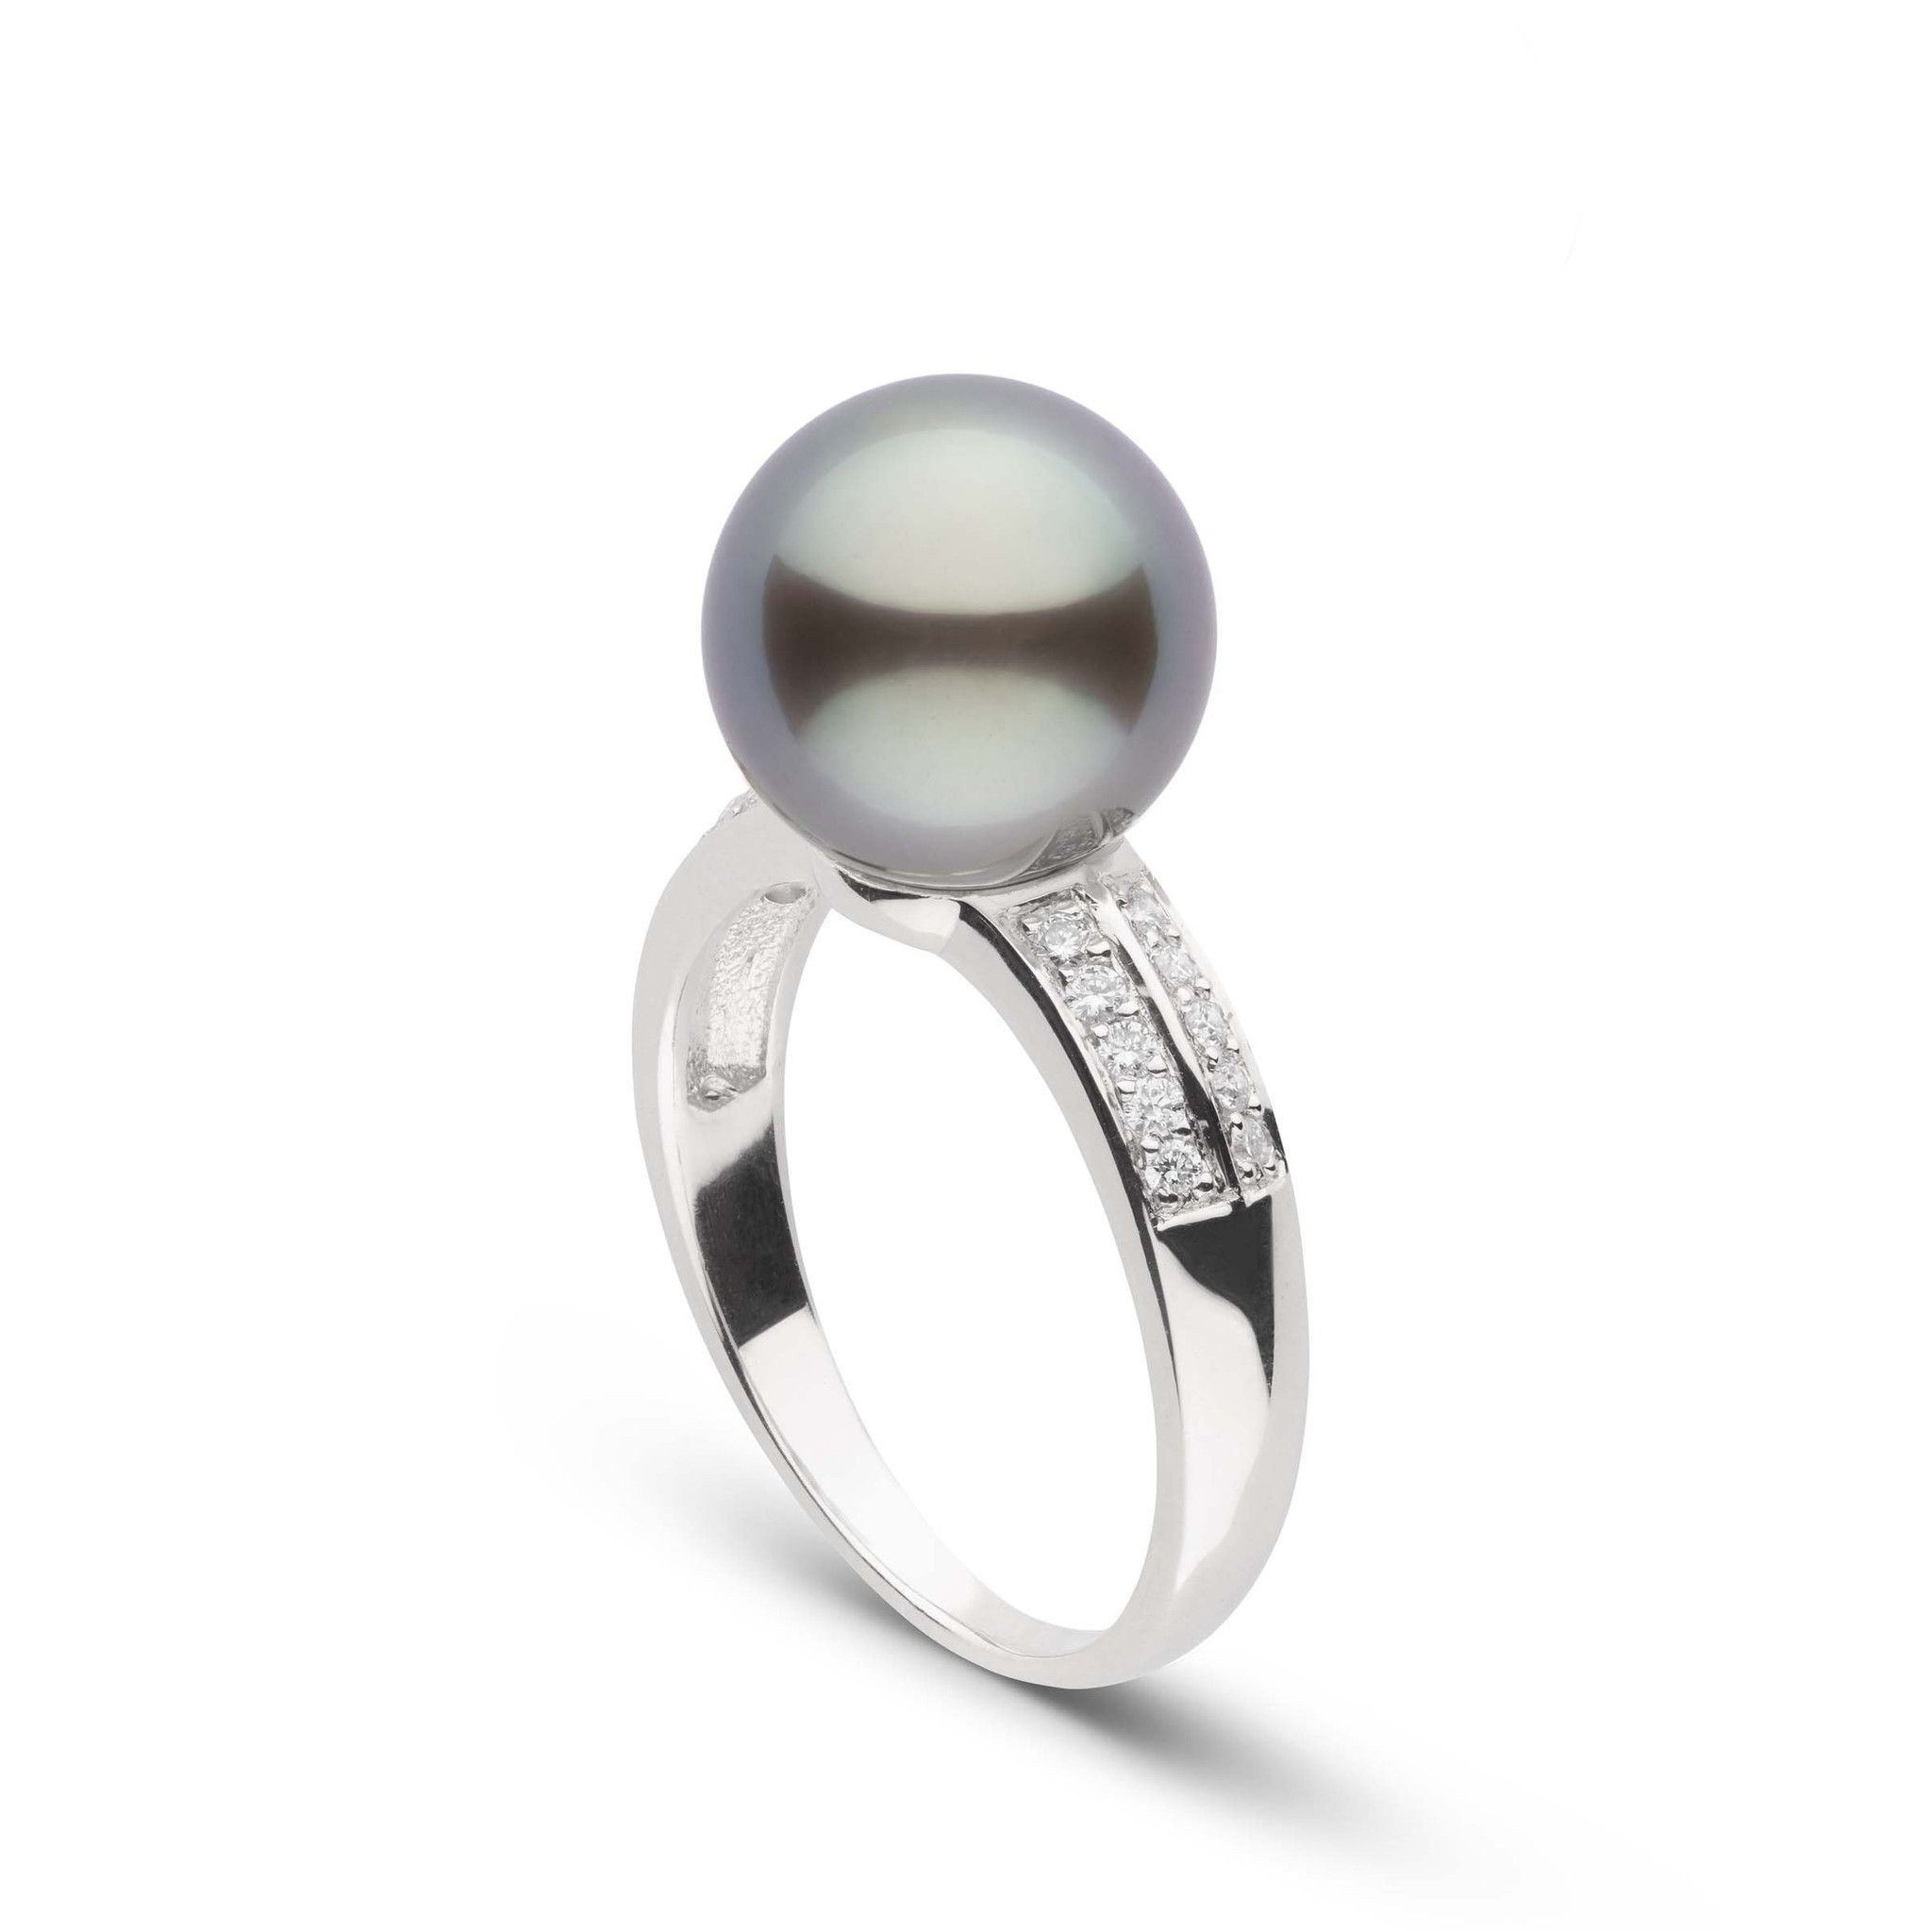 Pearl Rings, Black Pearl Rings, Vintage Pearl Rings, 10k White Gold Black  Pearl Ring, Stackable Rings, Black Pearl Jewelry, Size 5.5, C2577 - Etsy